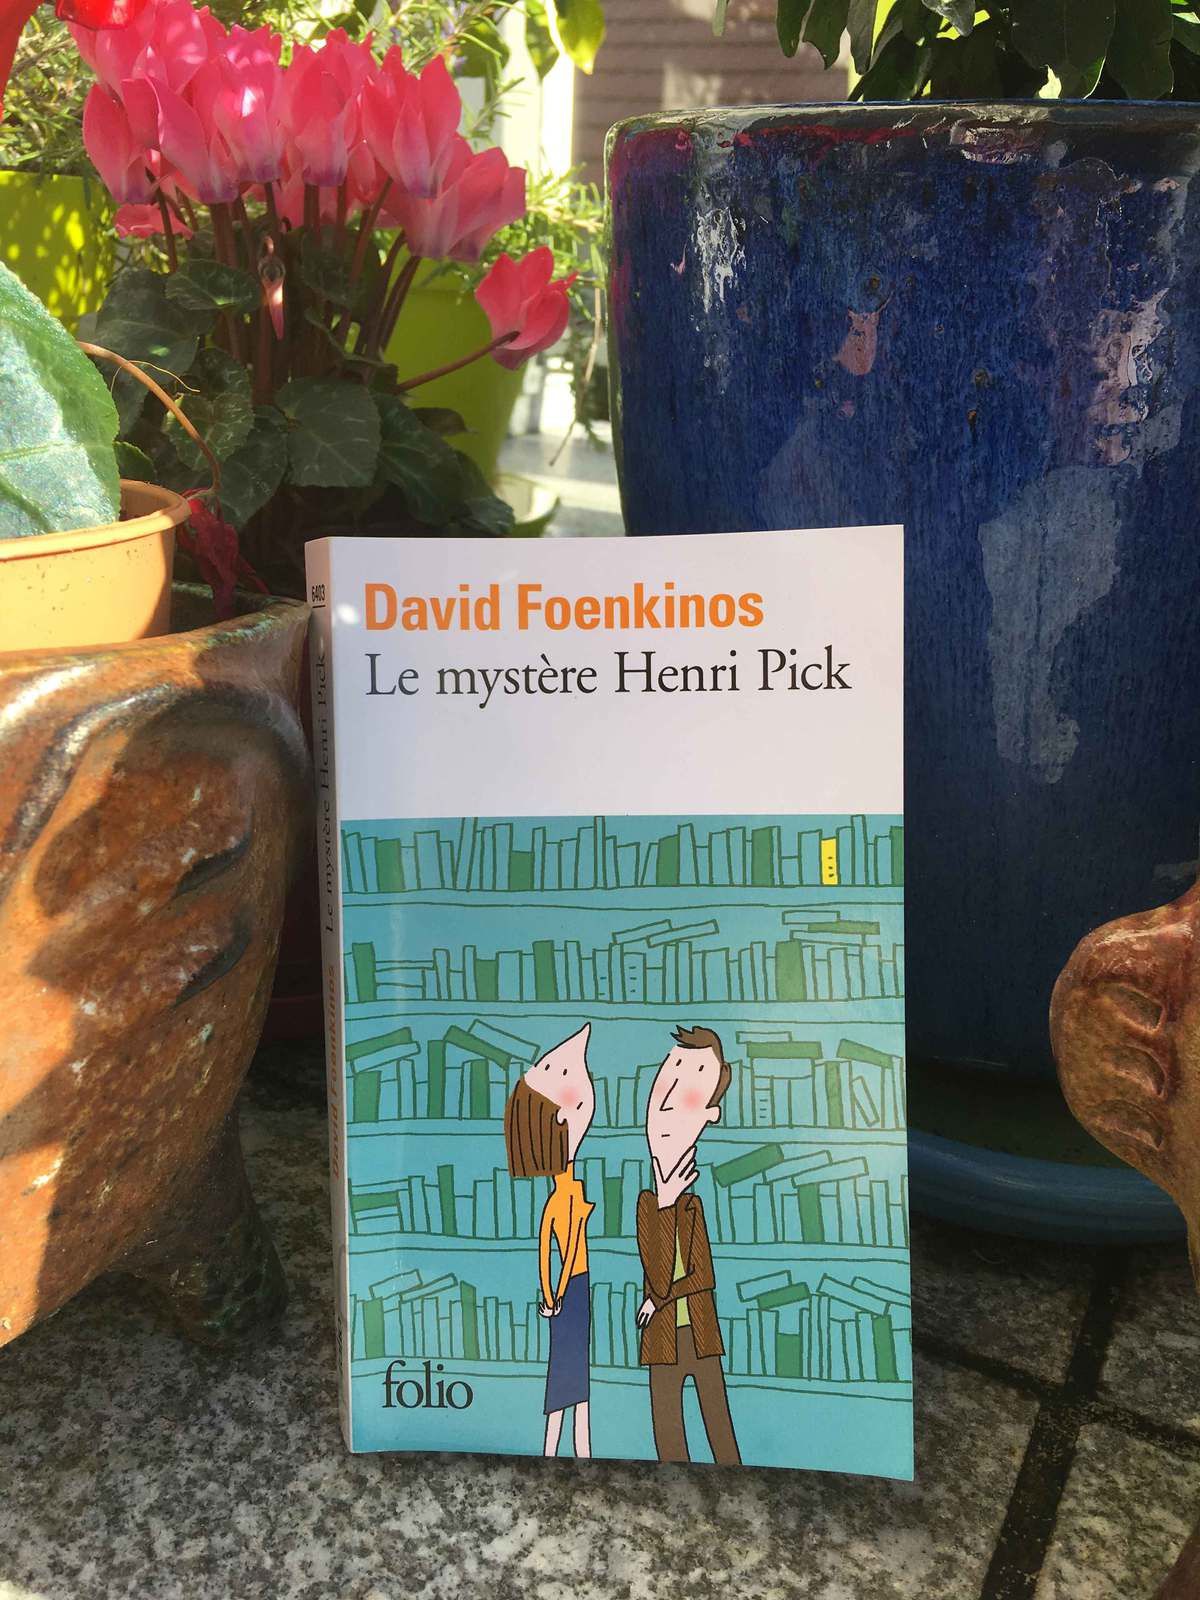 Le printemps d’Henri Pick – Le mystère Henri Pick - David Foenkinos – Littérature – romans 